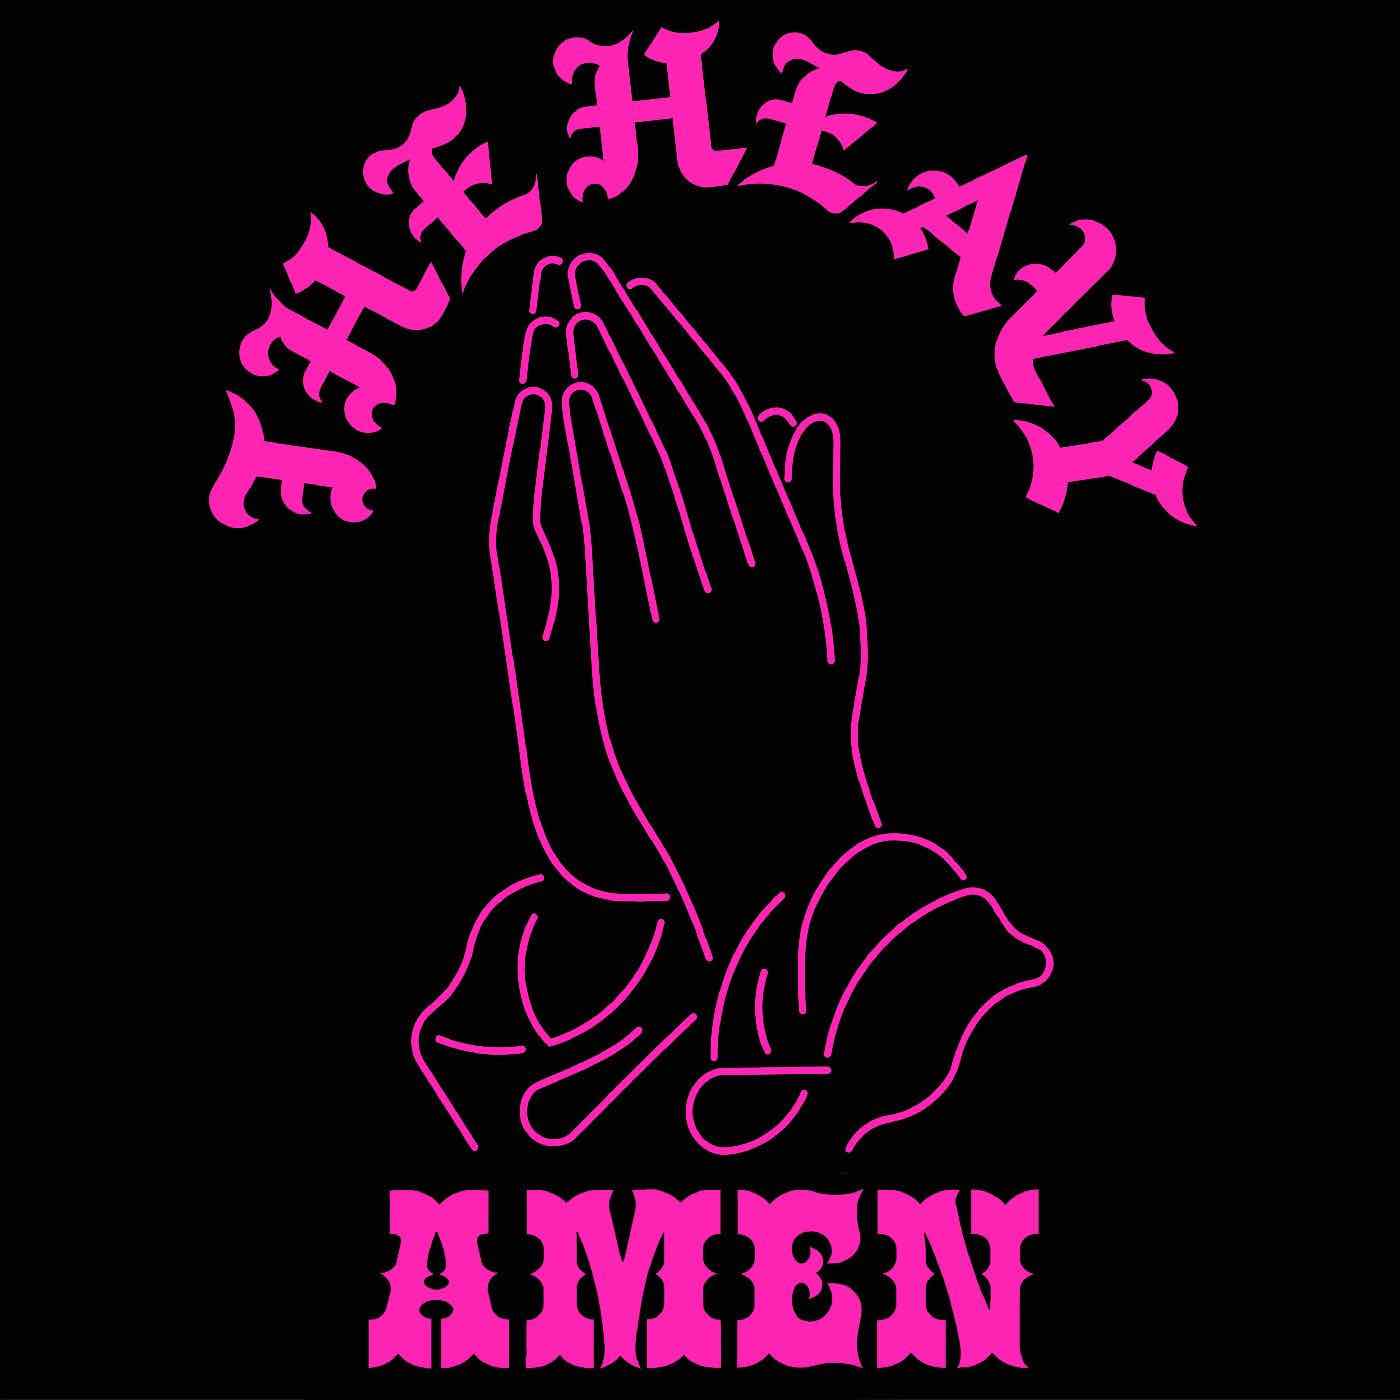 Heavy, The - Amen LP